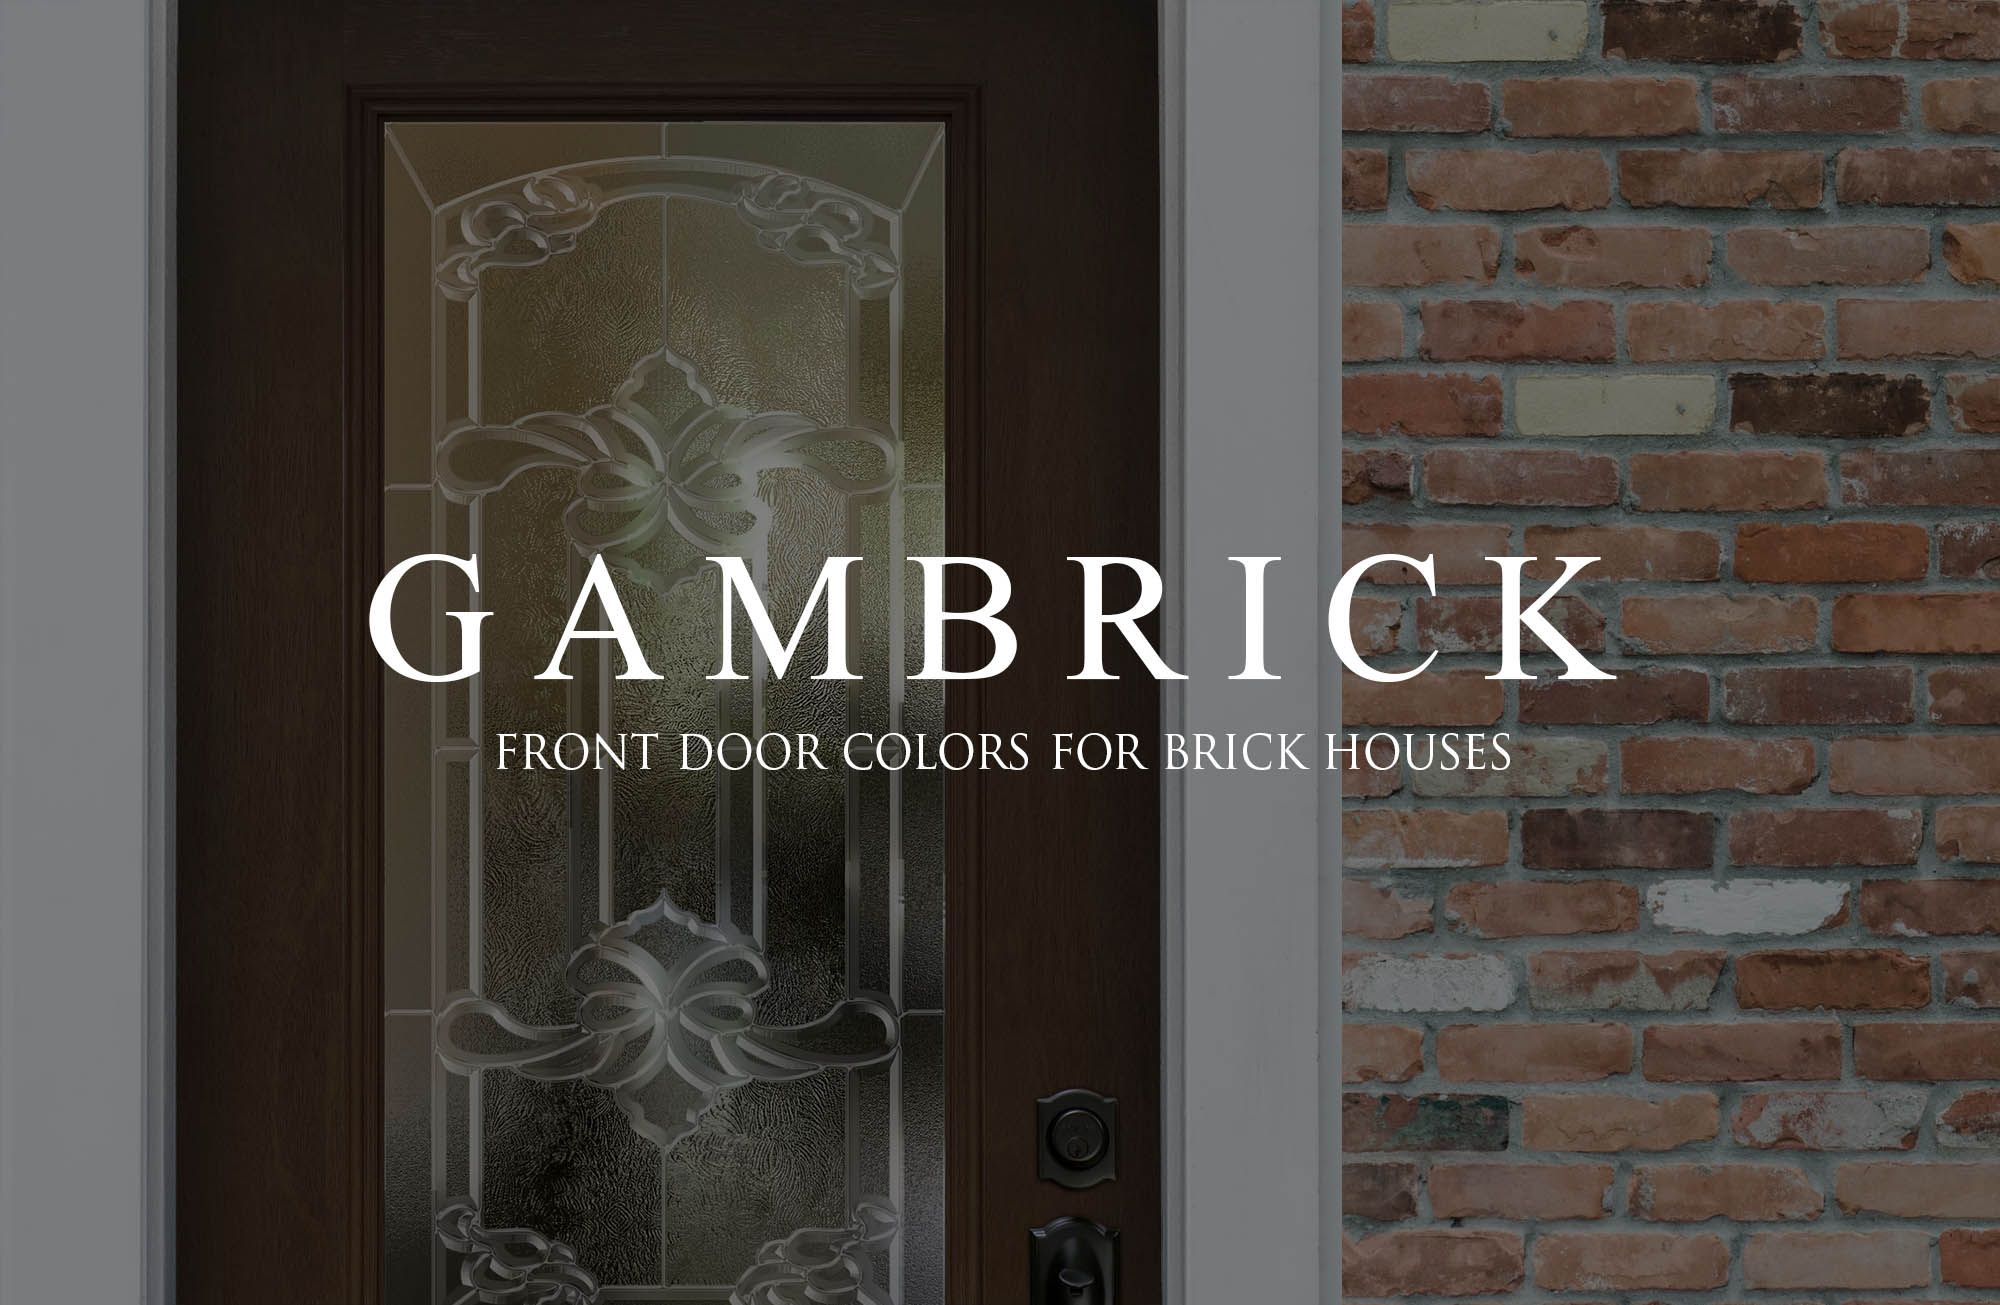 front door colors for brick houses banner pic closeup of brown front door with red brick